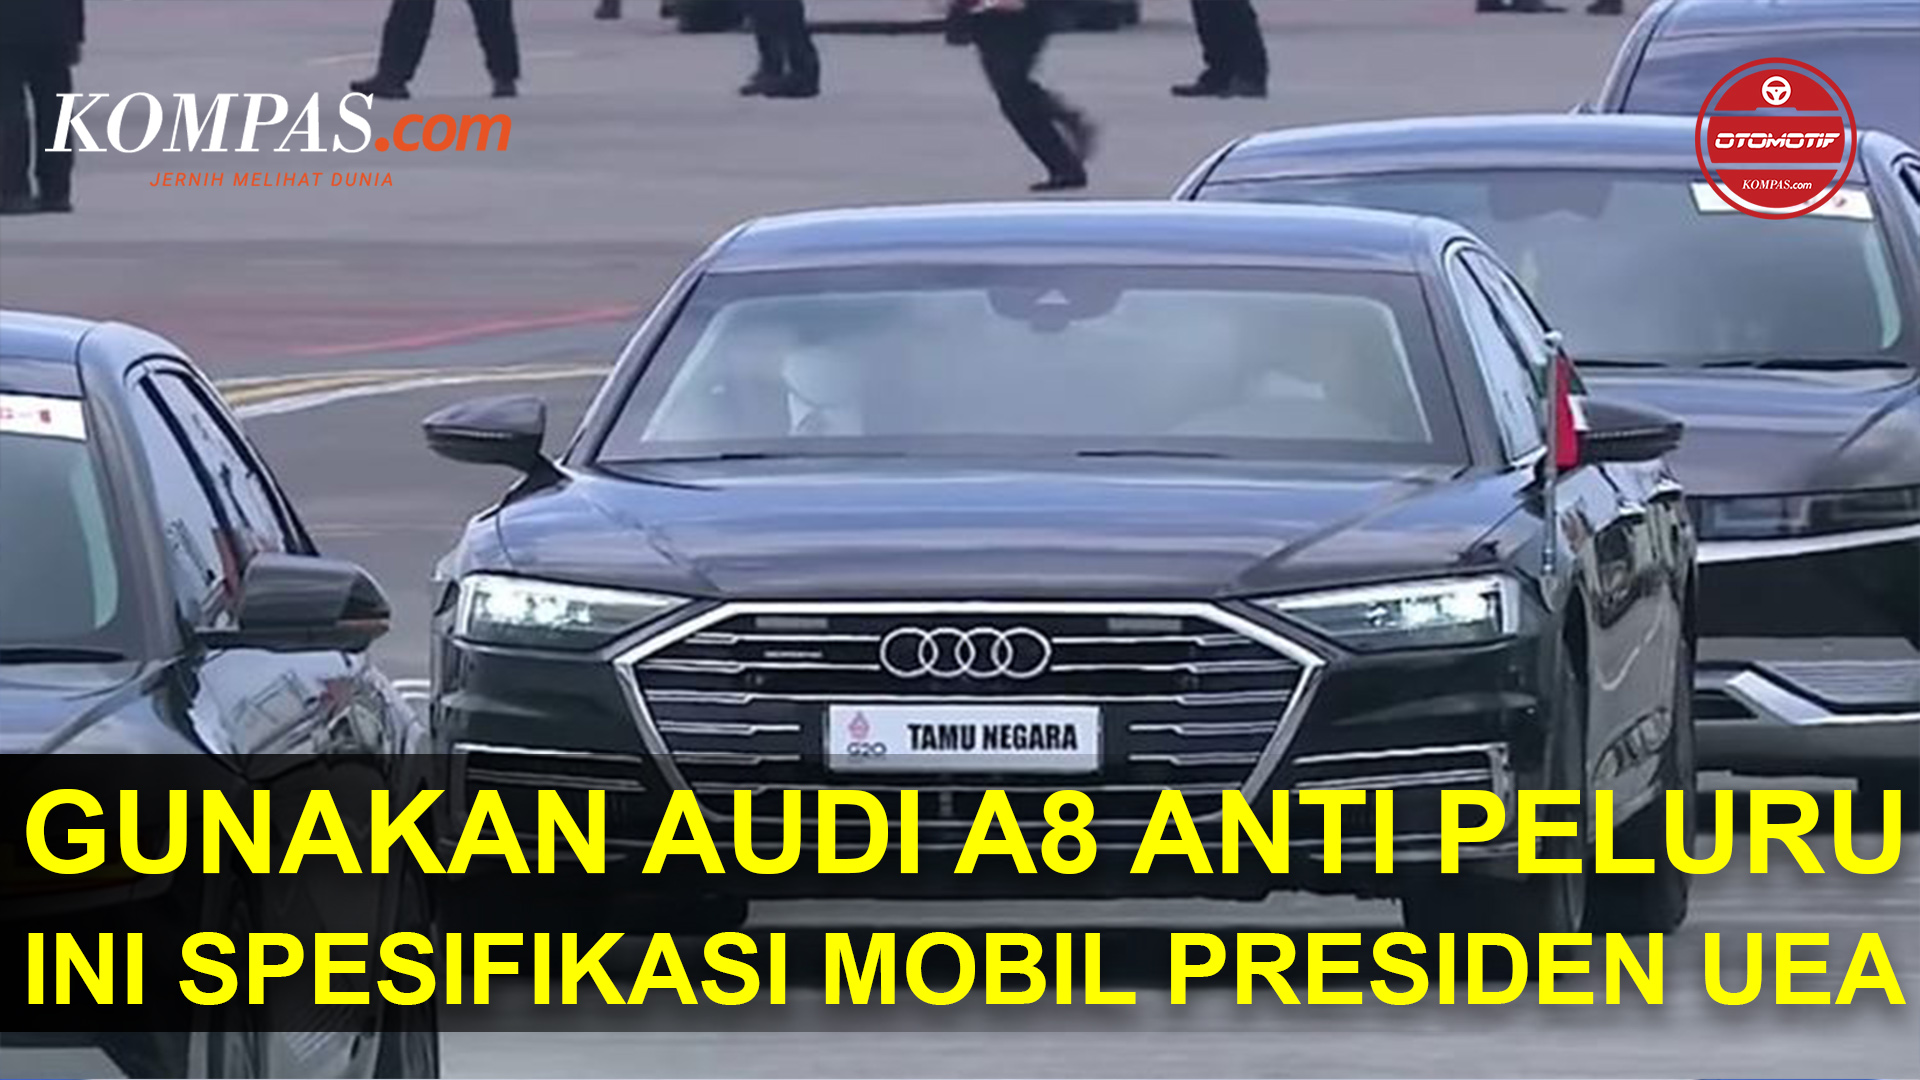 Presiden UEA Gunakan Audi A8 Anti-Peluru, Intip Spesifikasinya